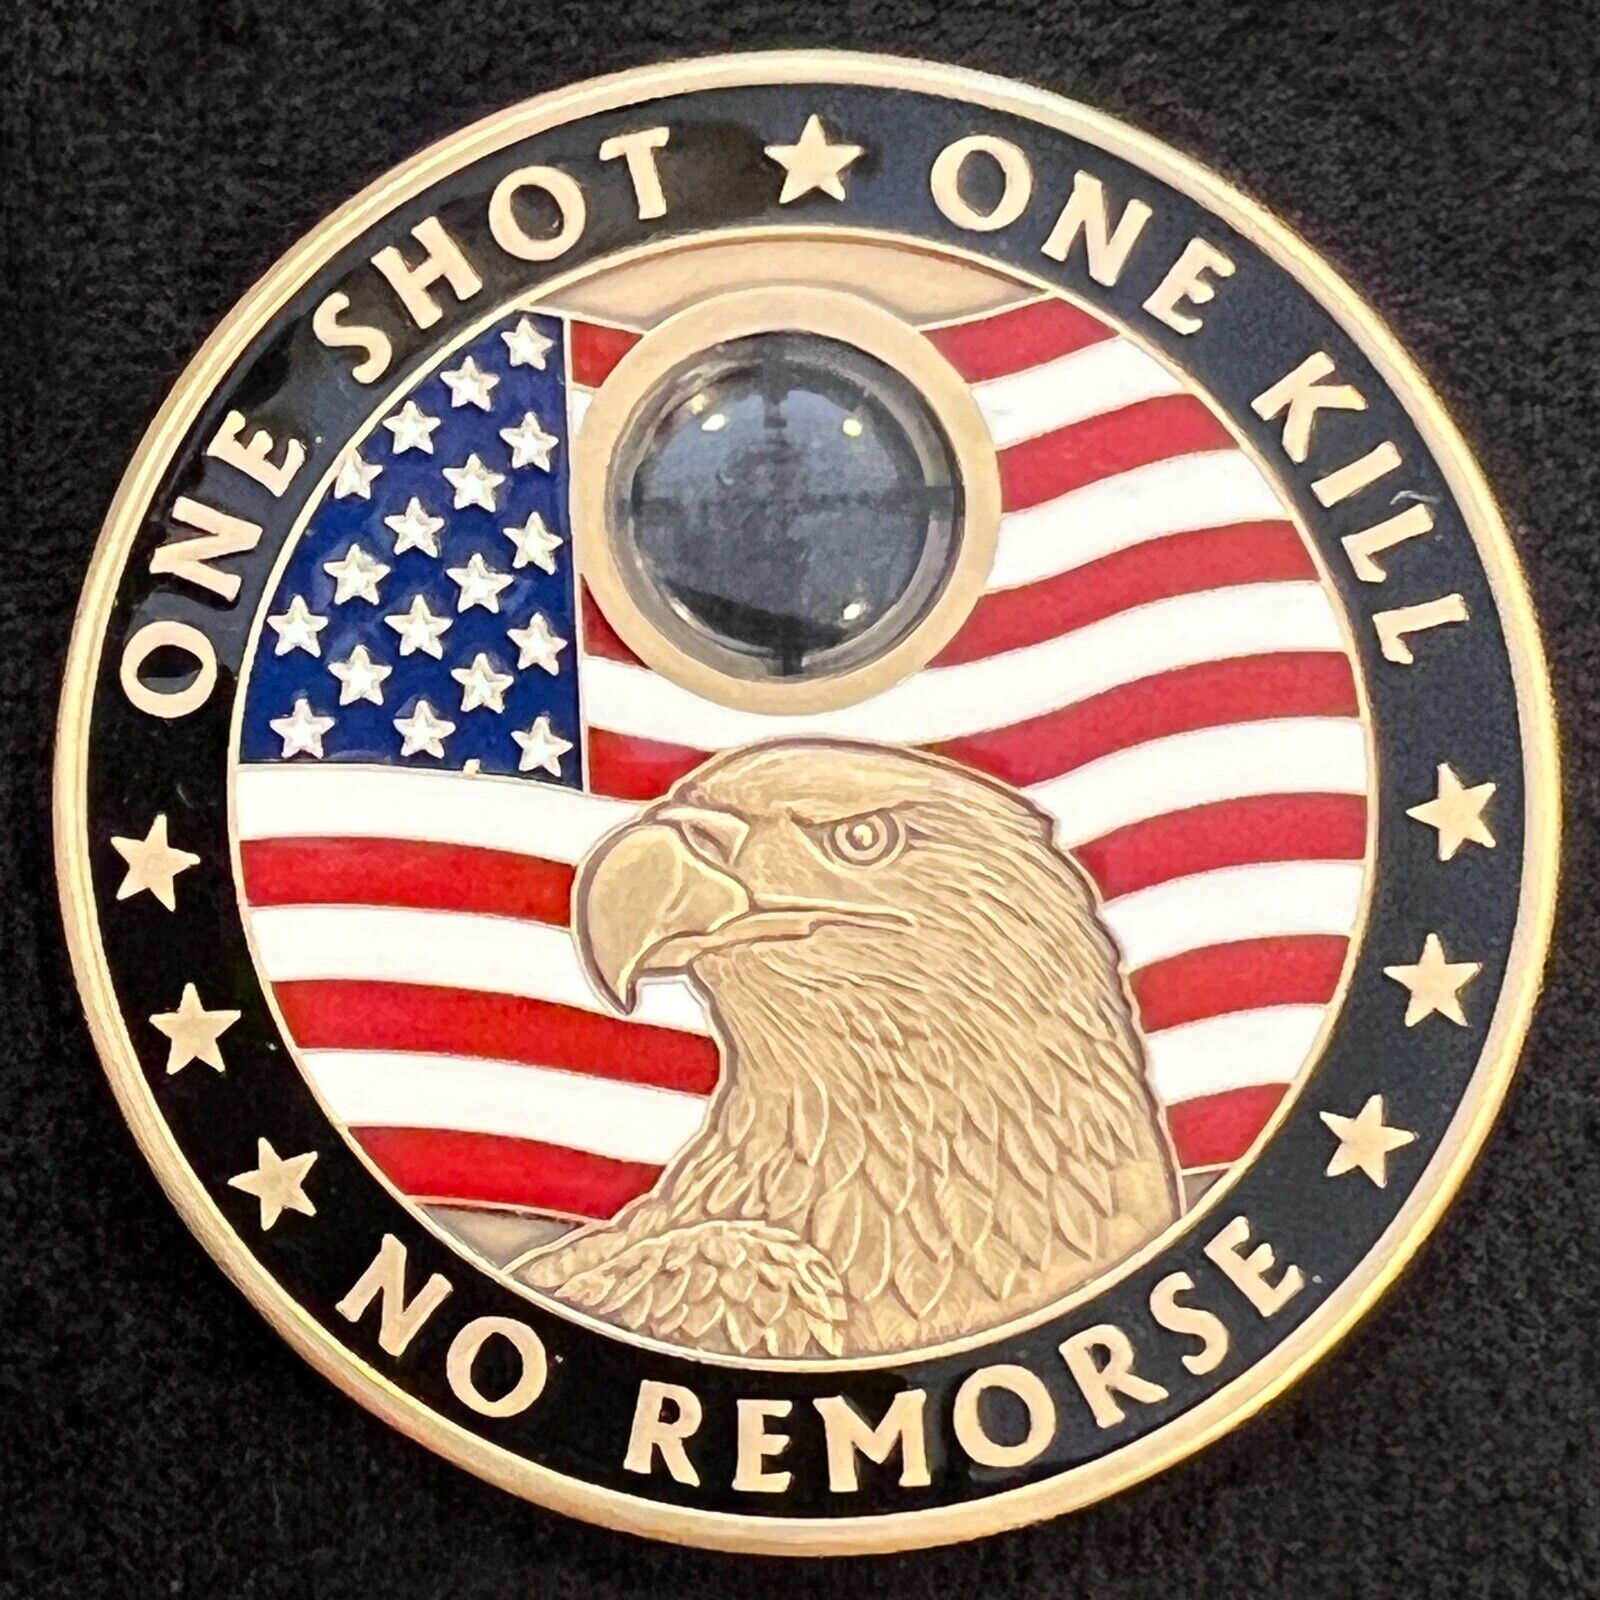 Ventura Police SWAT Counter Sniper Team Challenge Coin